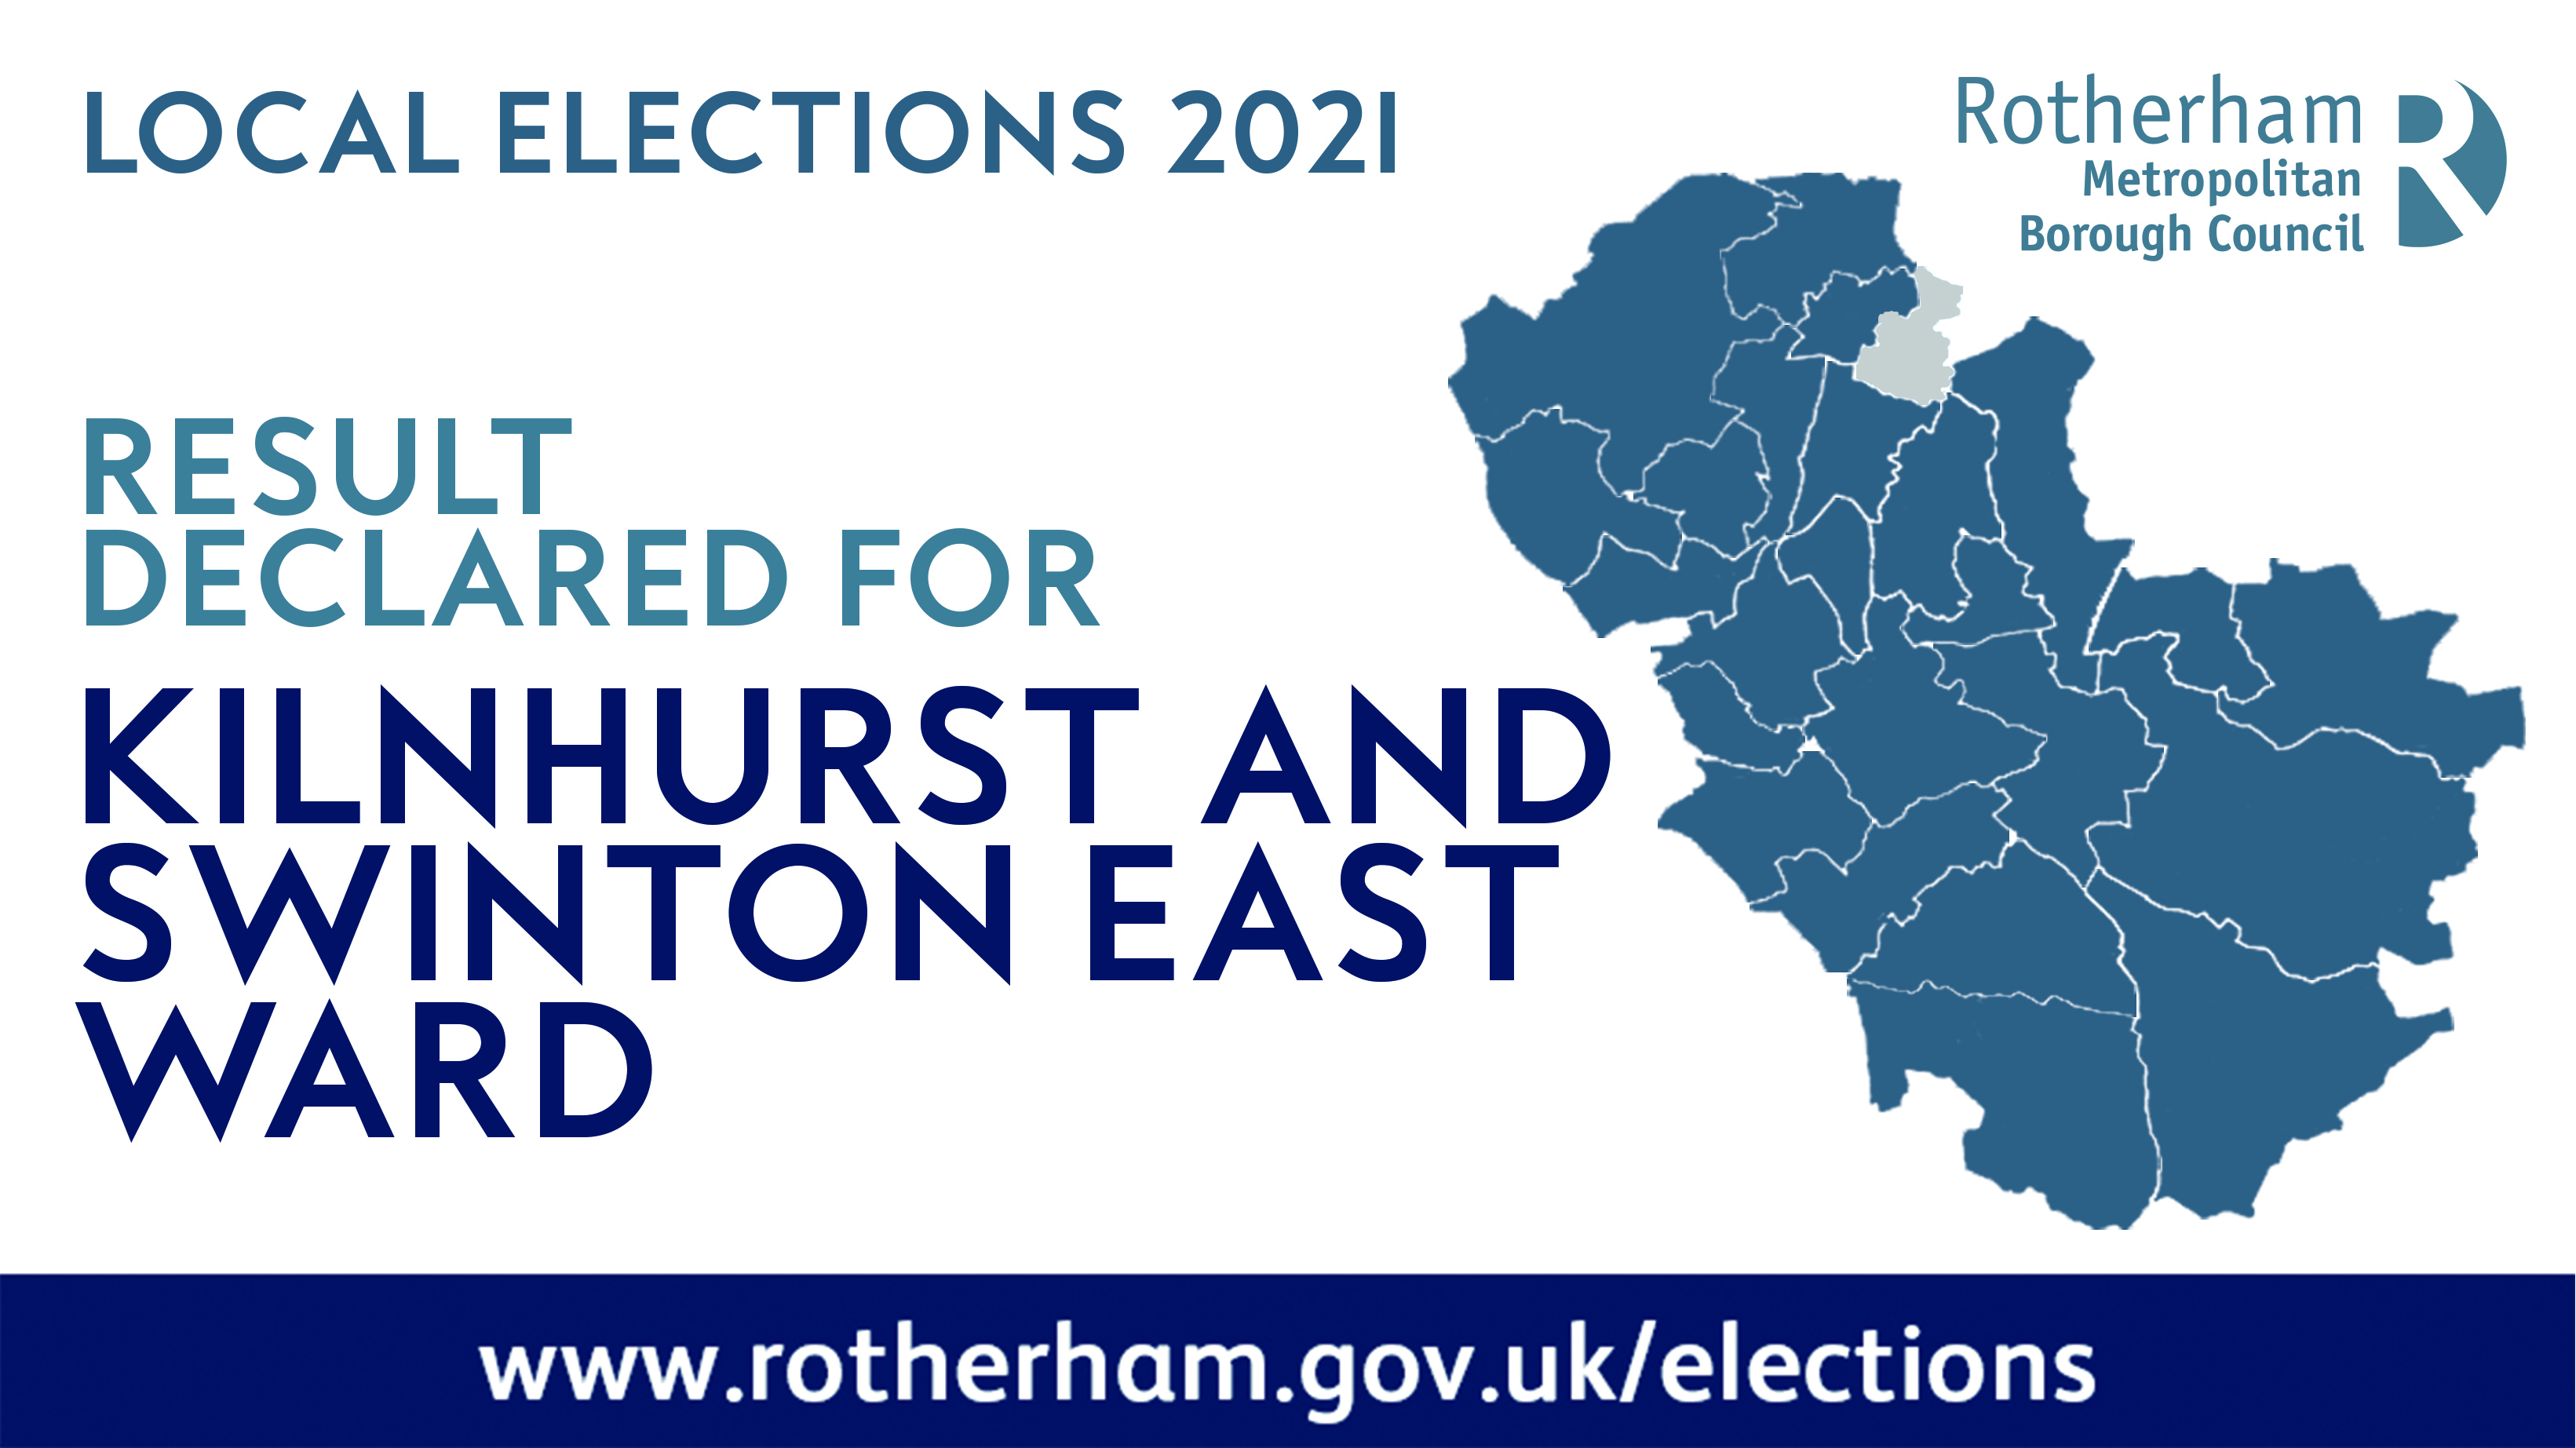 Kilnhurst and Swinton East ward declared